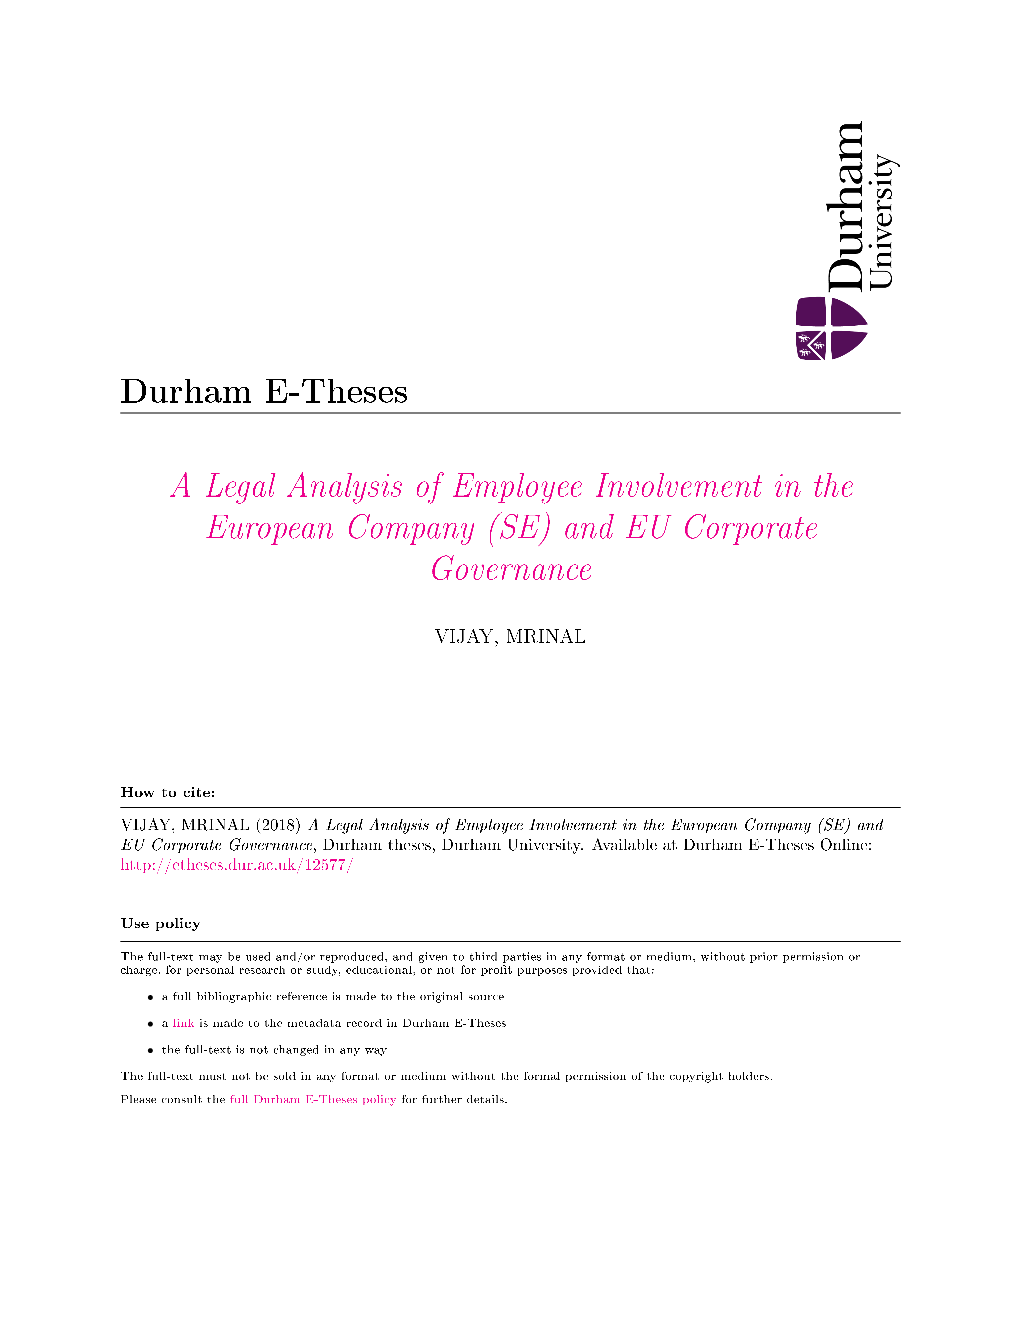 Employee Involvement in the Eu's Corporate Governance Regime